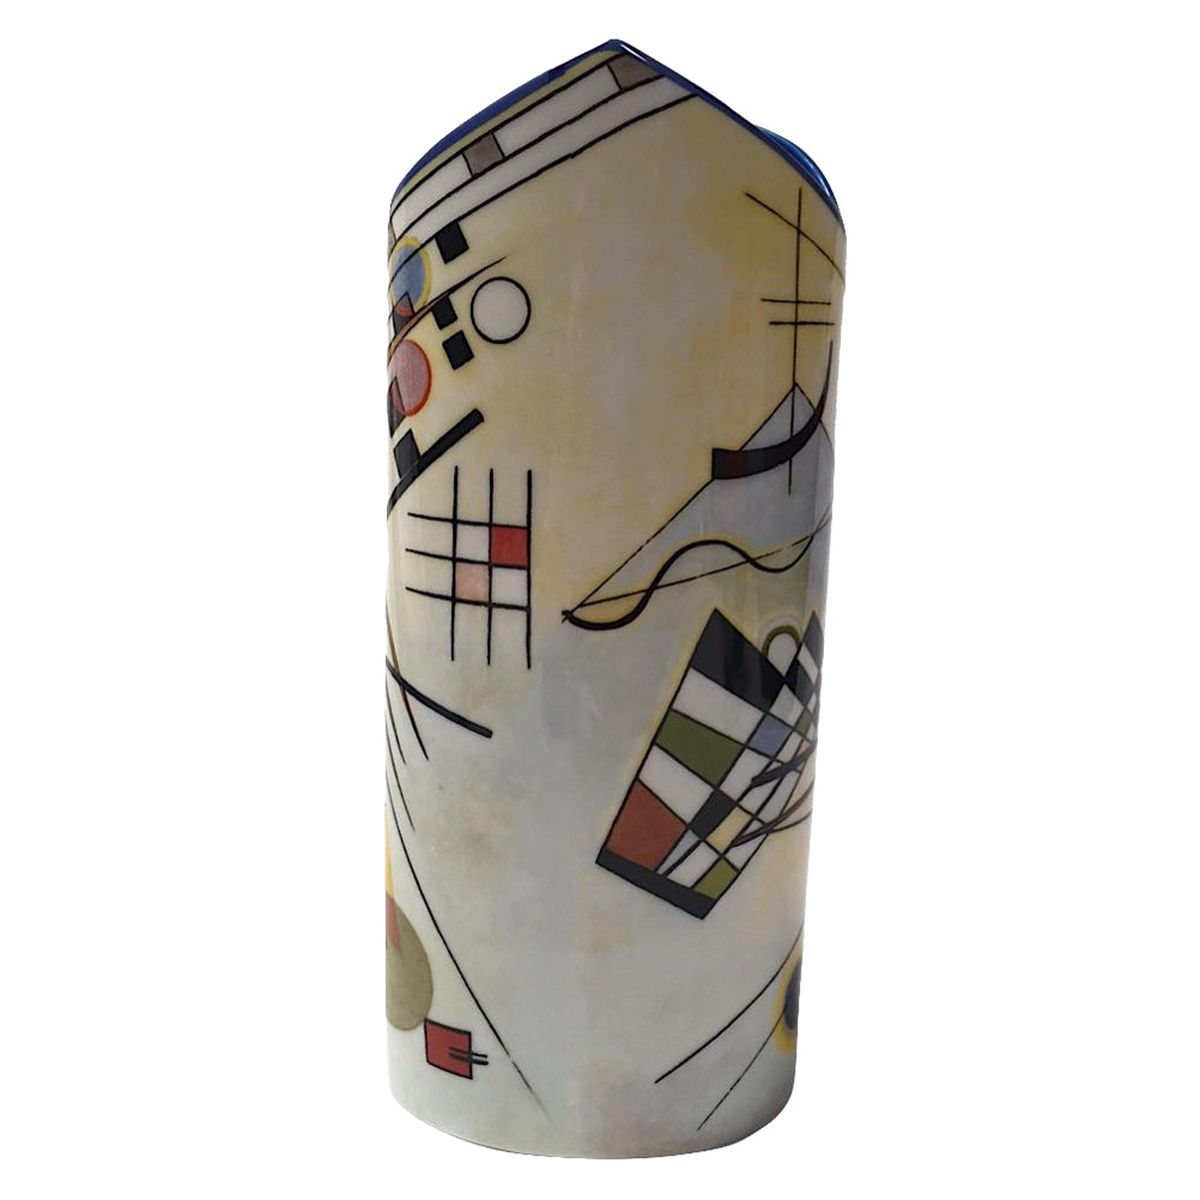 Kandinsky silhouette ceramic vase - Composition VIII